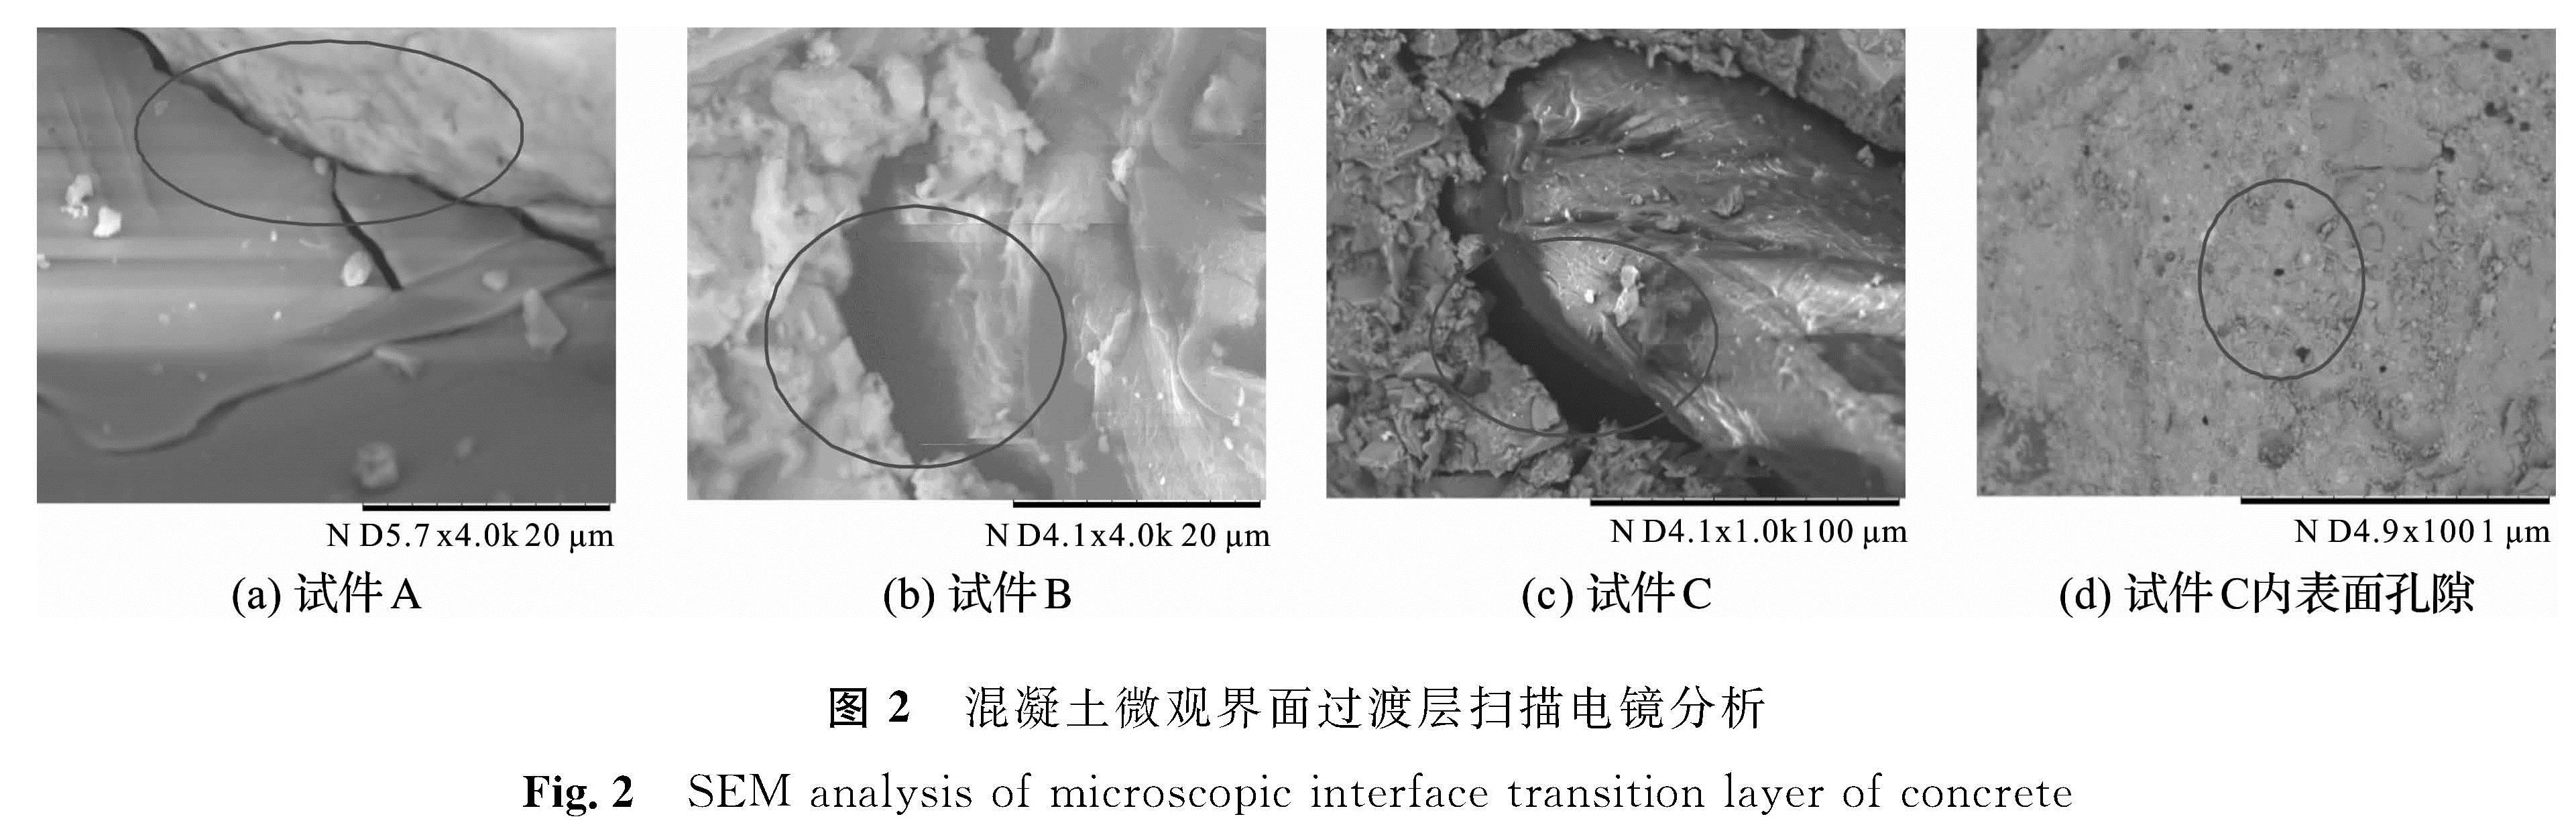 图2 混凝土微观界面过渡层扫描电镜分析<br/>Fig.2 SEM analysis of microscopic interface transition layer of concrete